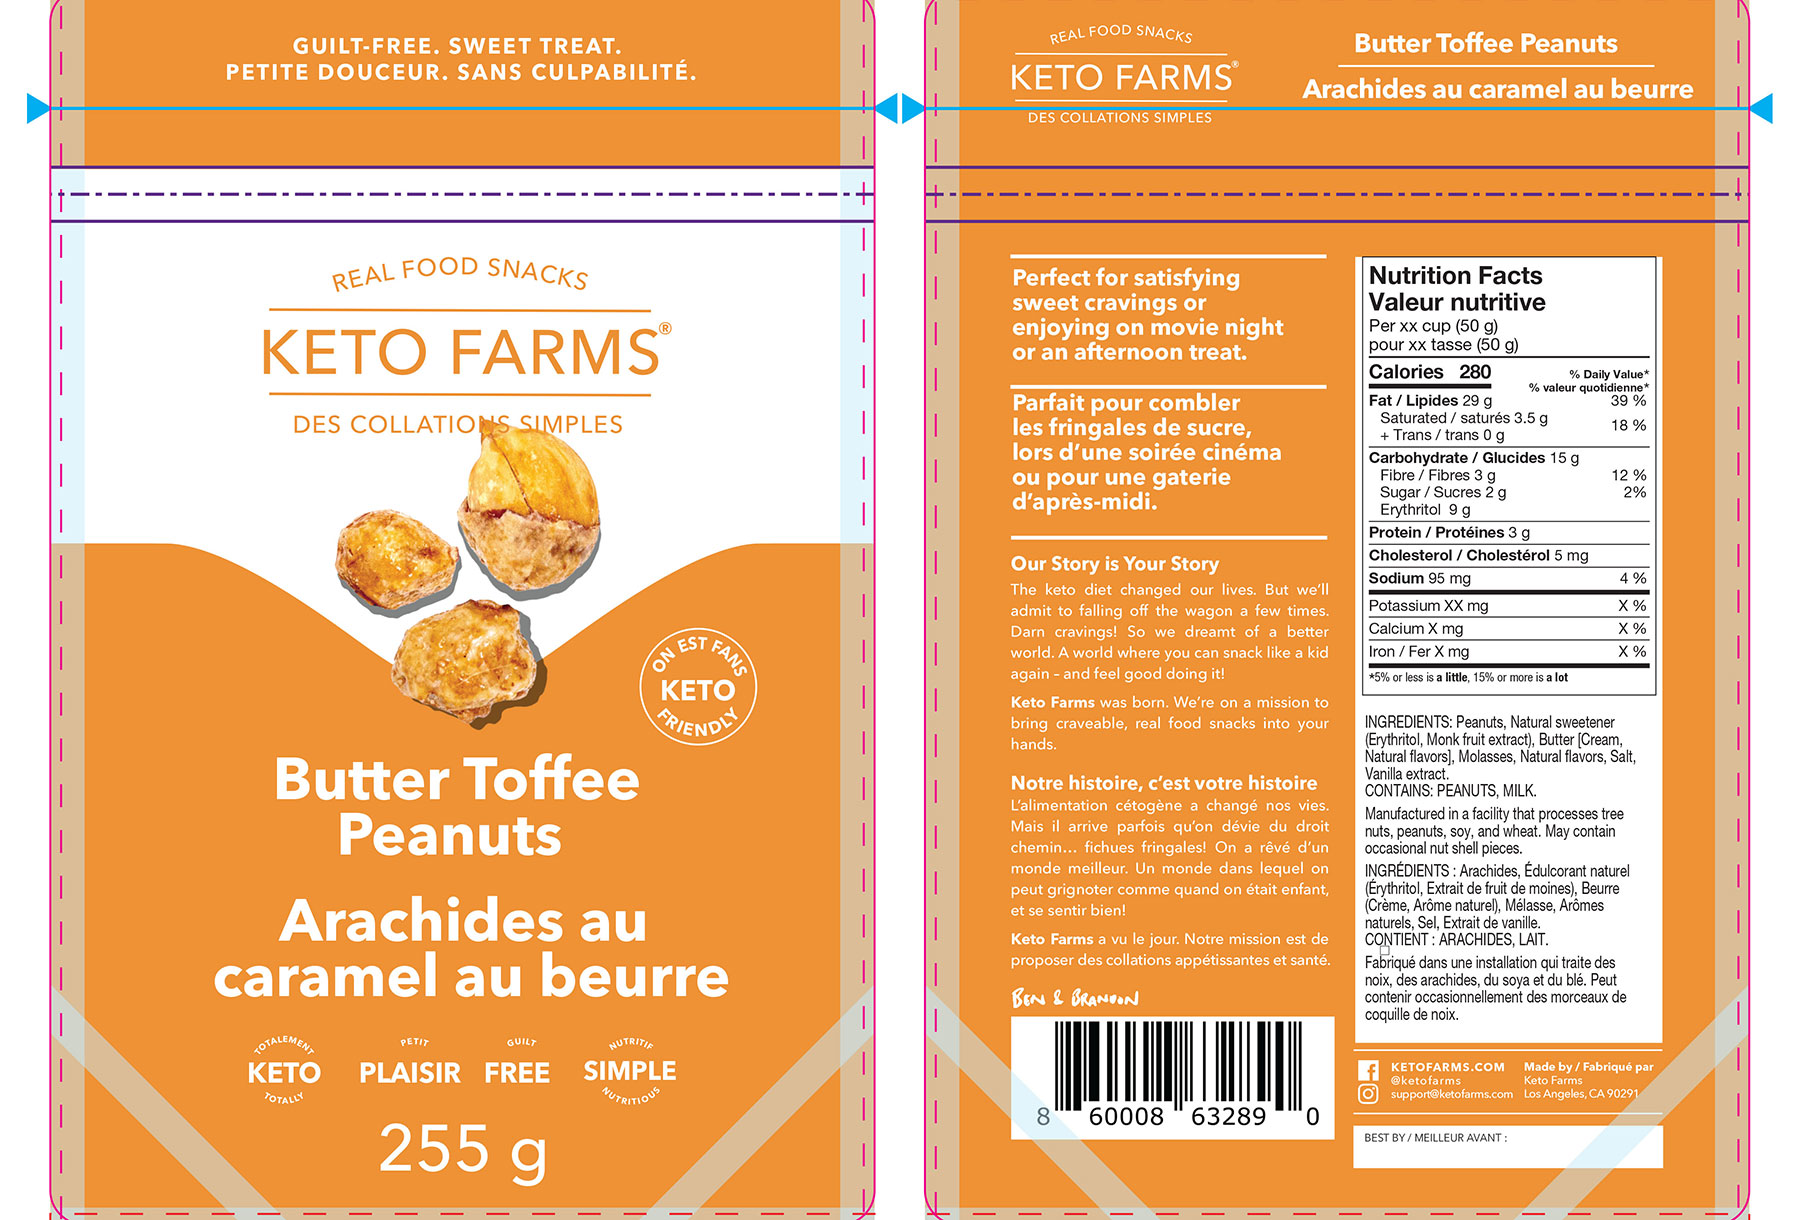 Ketofarms - Butter Toffee Peanuts Canada